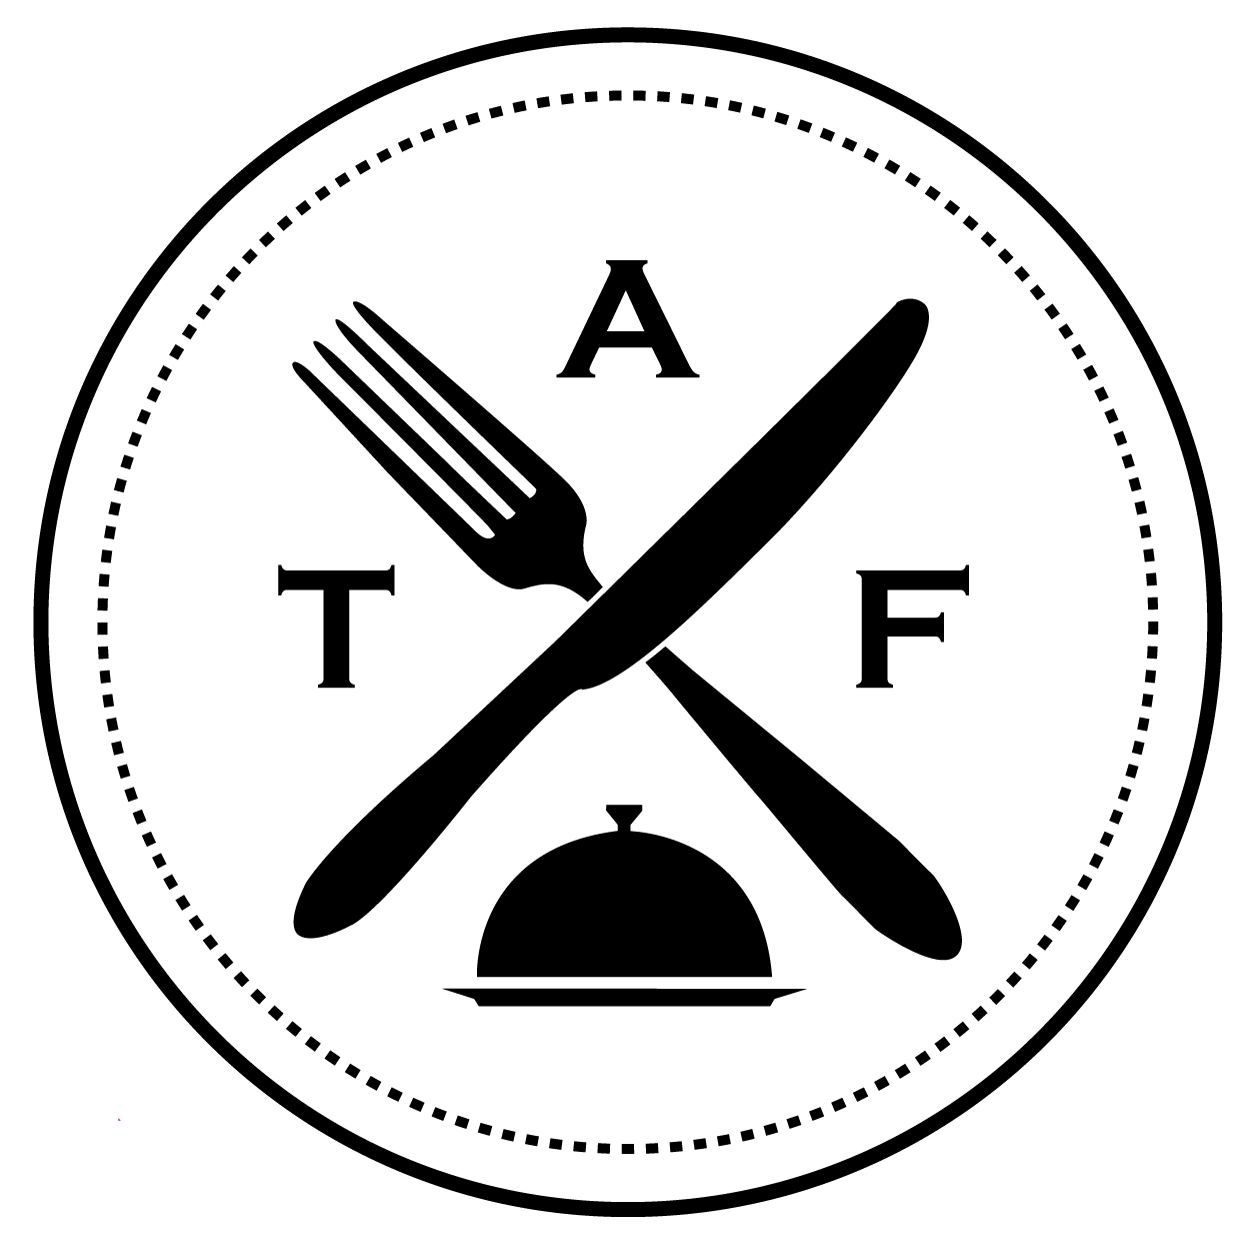 https://auroratai.files.wordpress.com/2017/12/cropped-the-accidental-foodie-logo-1250x1250.png